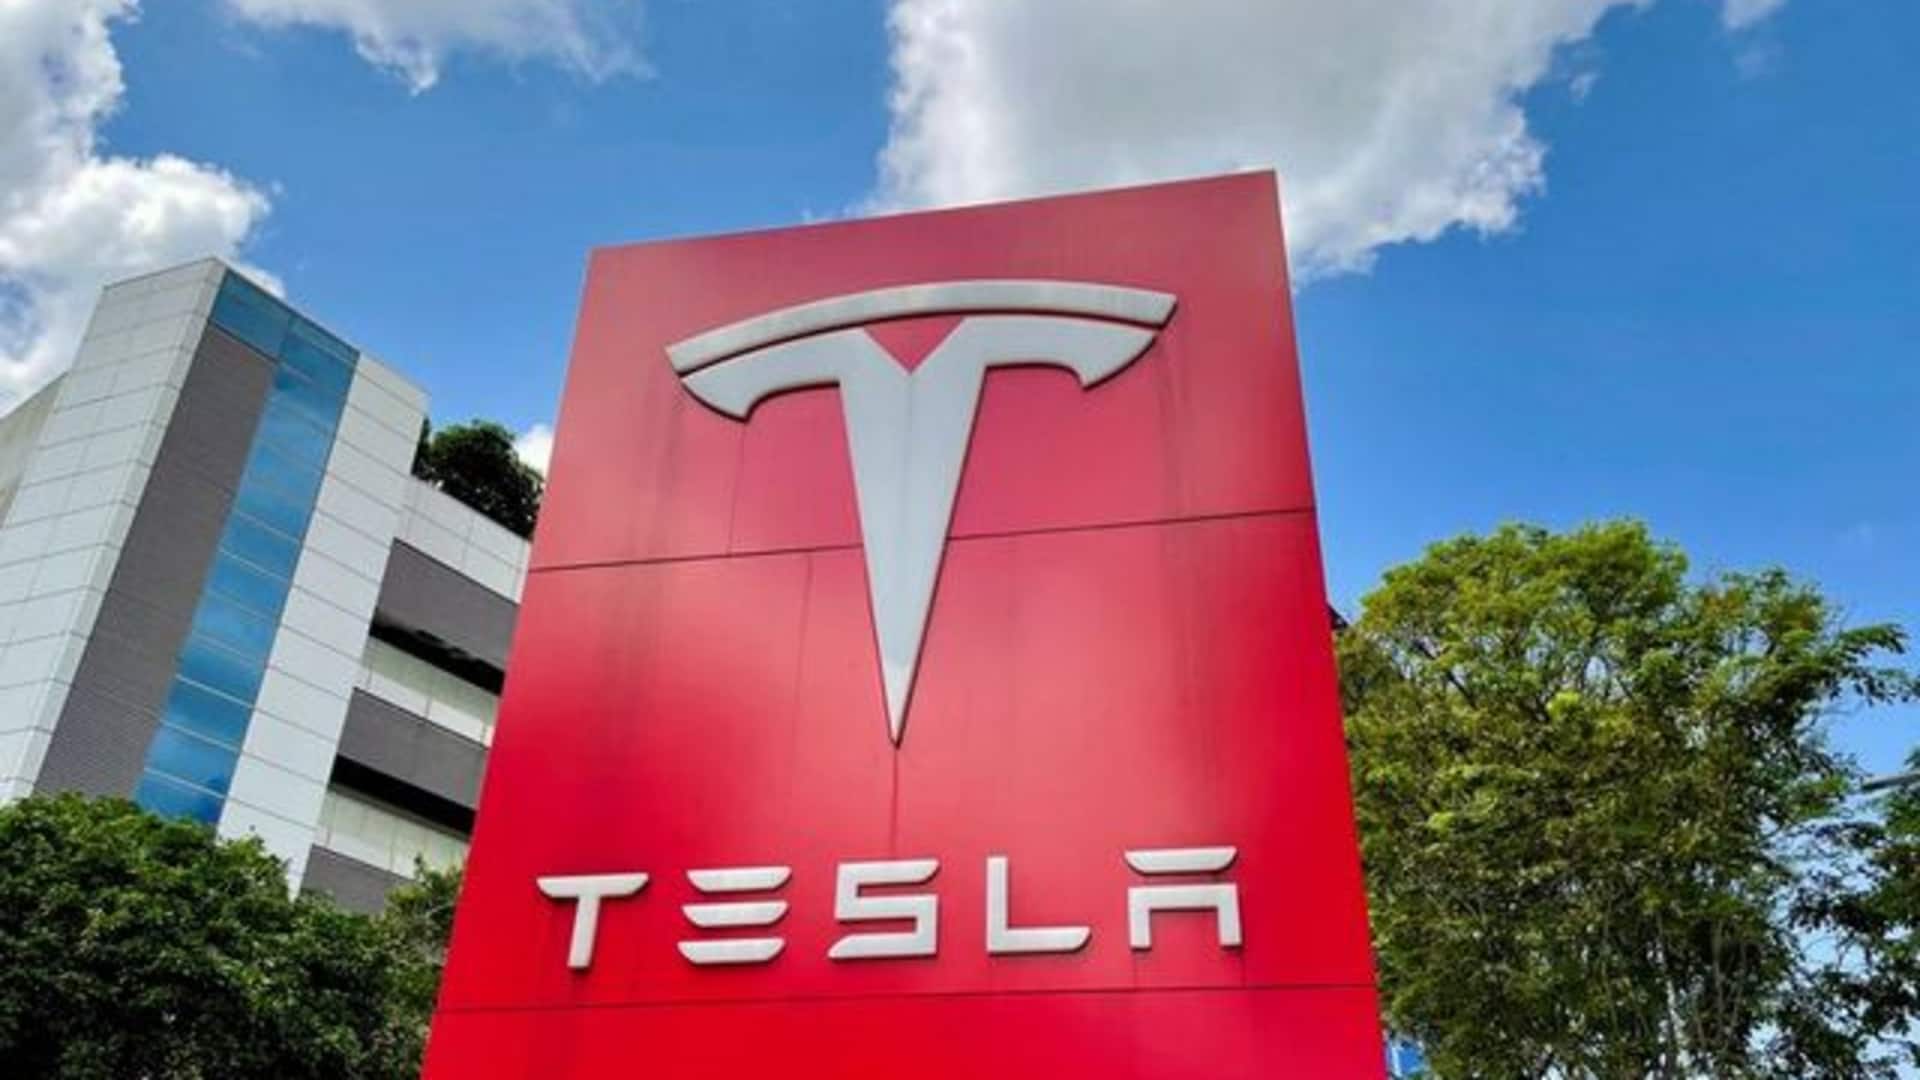 Tesla spent $200,000 to advertise on X